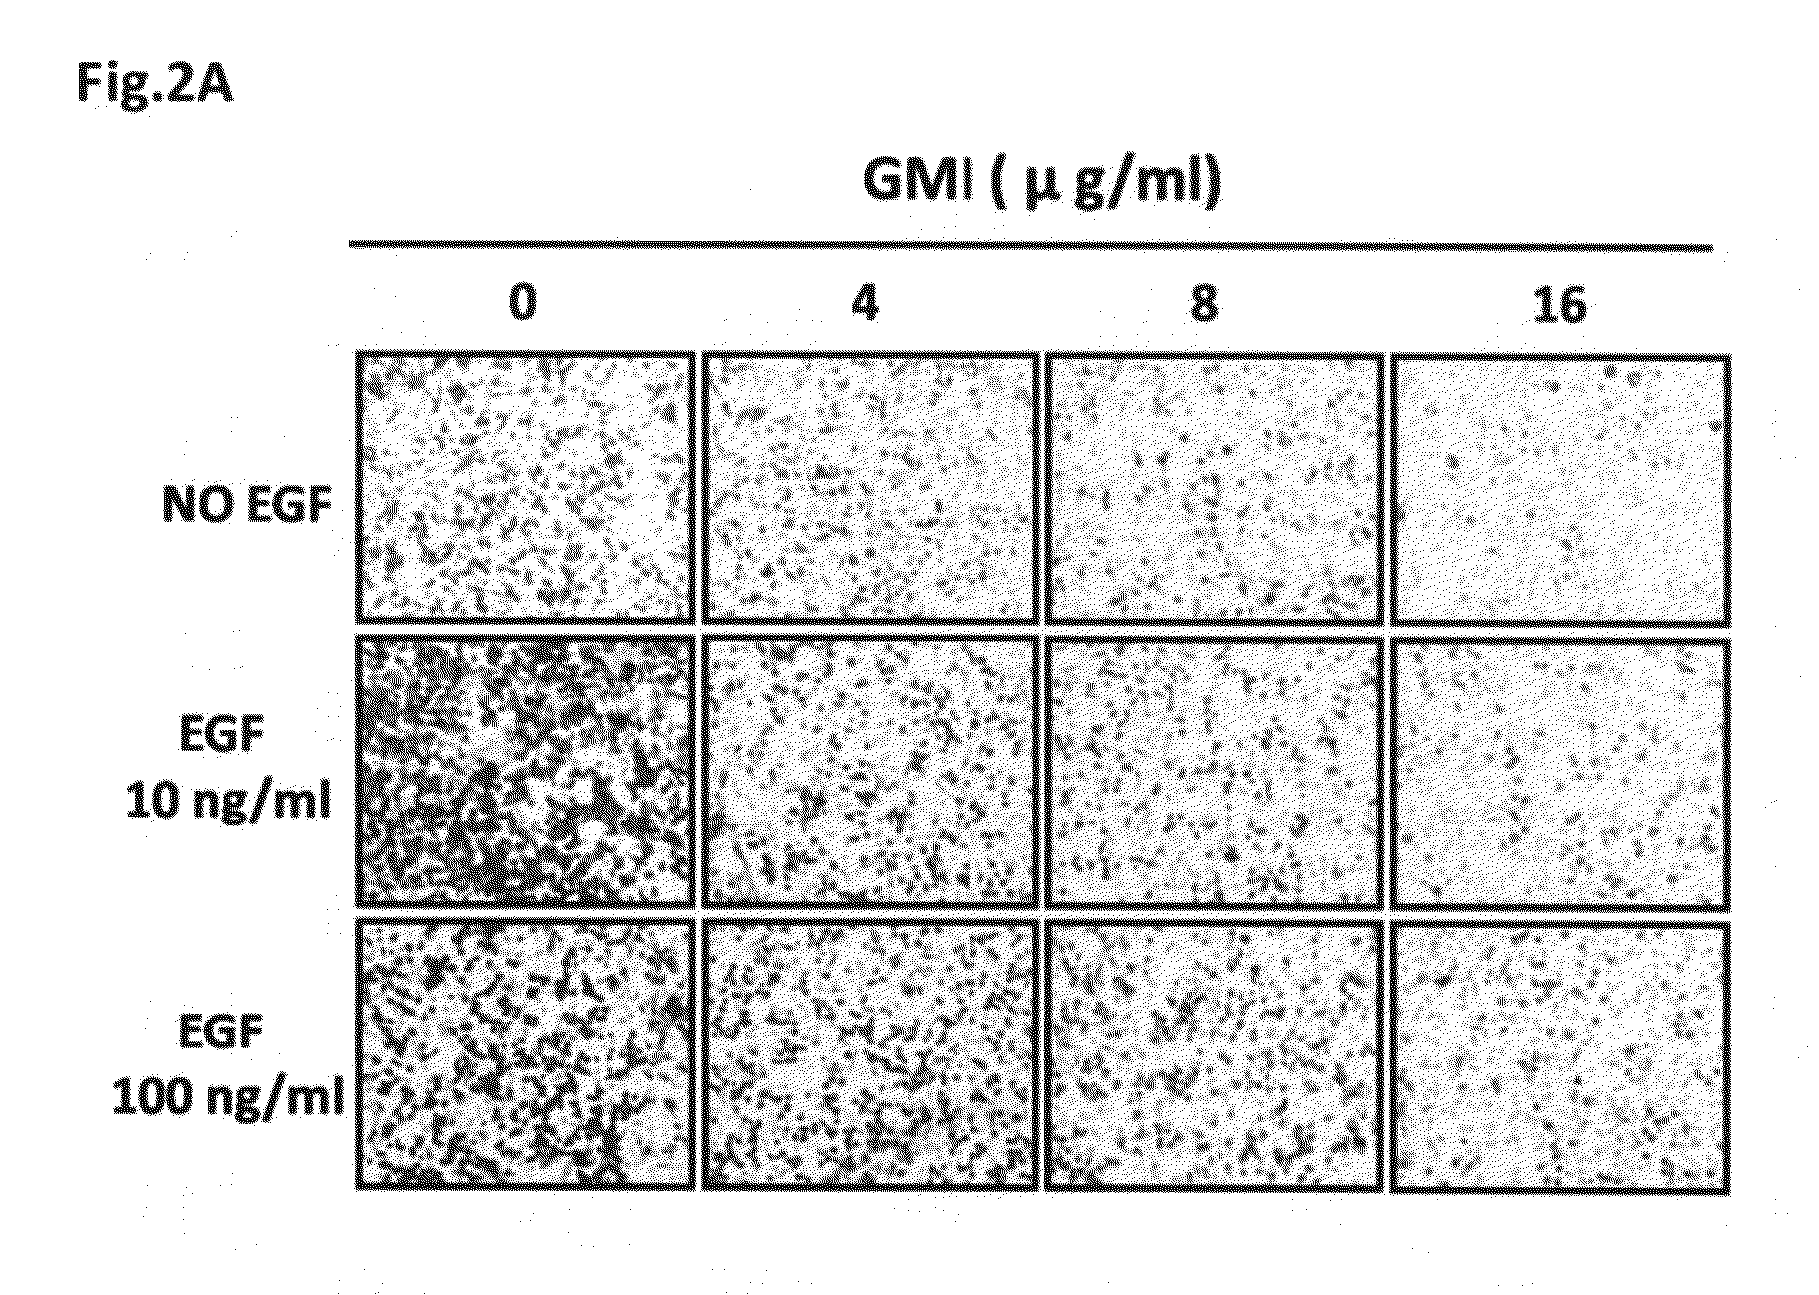 Uses of an Immunomodulatory Protein (GMI) from Ganoderma Microsporum